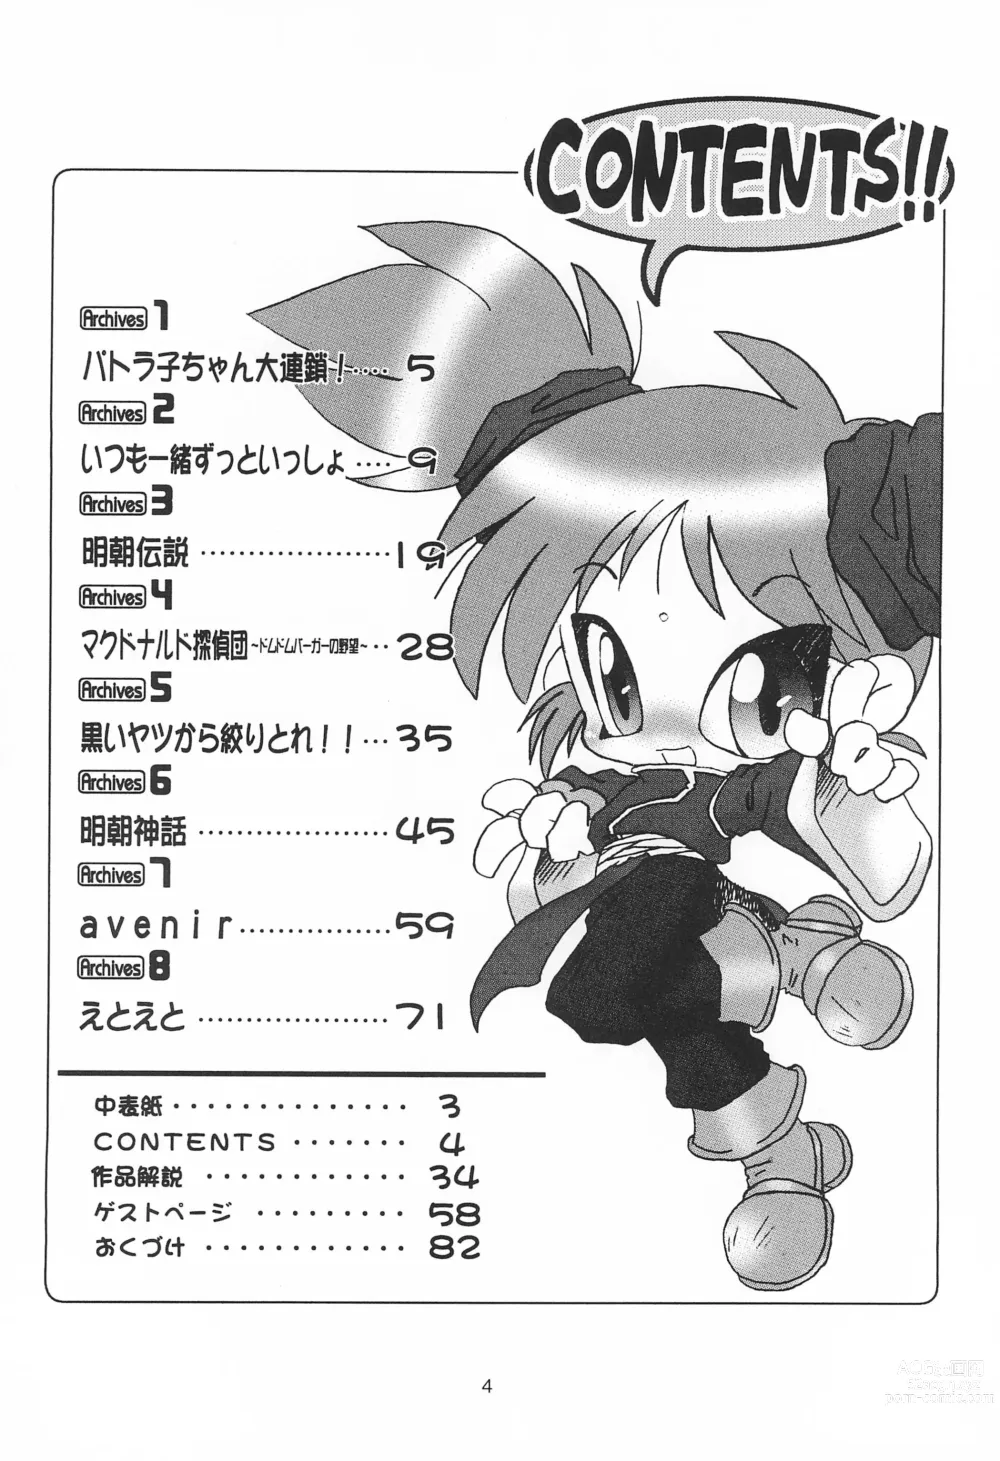 Page 4 of doujinshi Yonemaru Archive